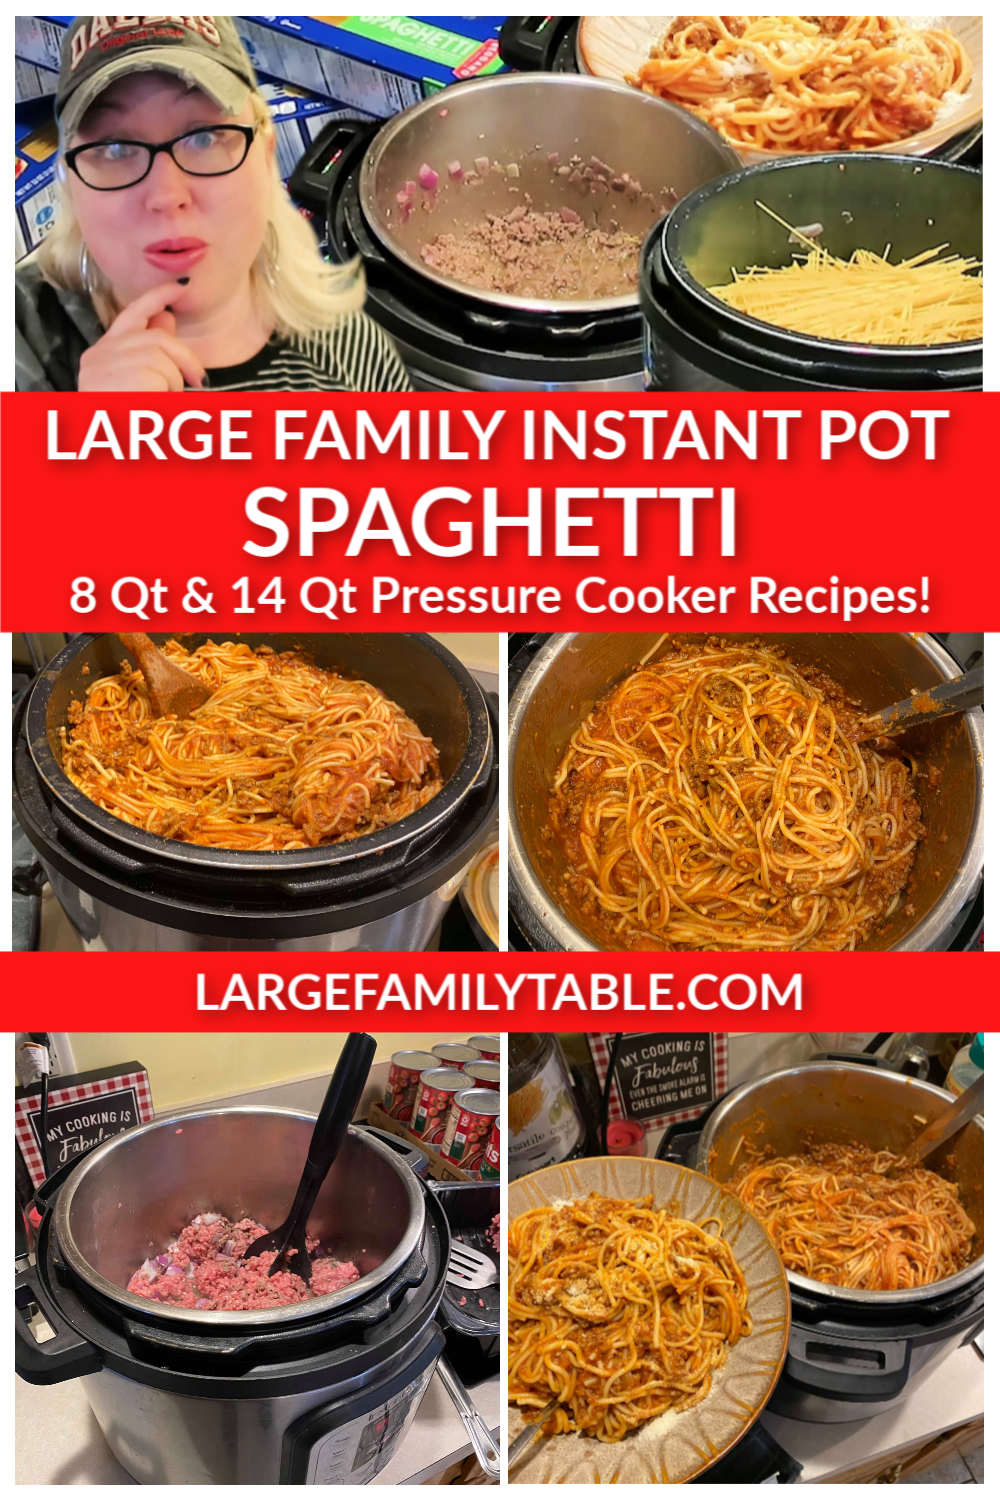 490, Large Family Instant Pot Recipes, ideas